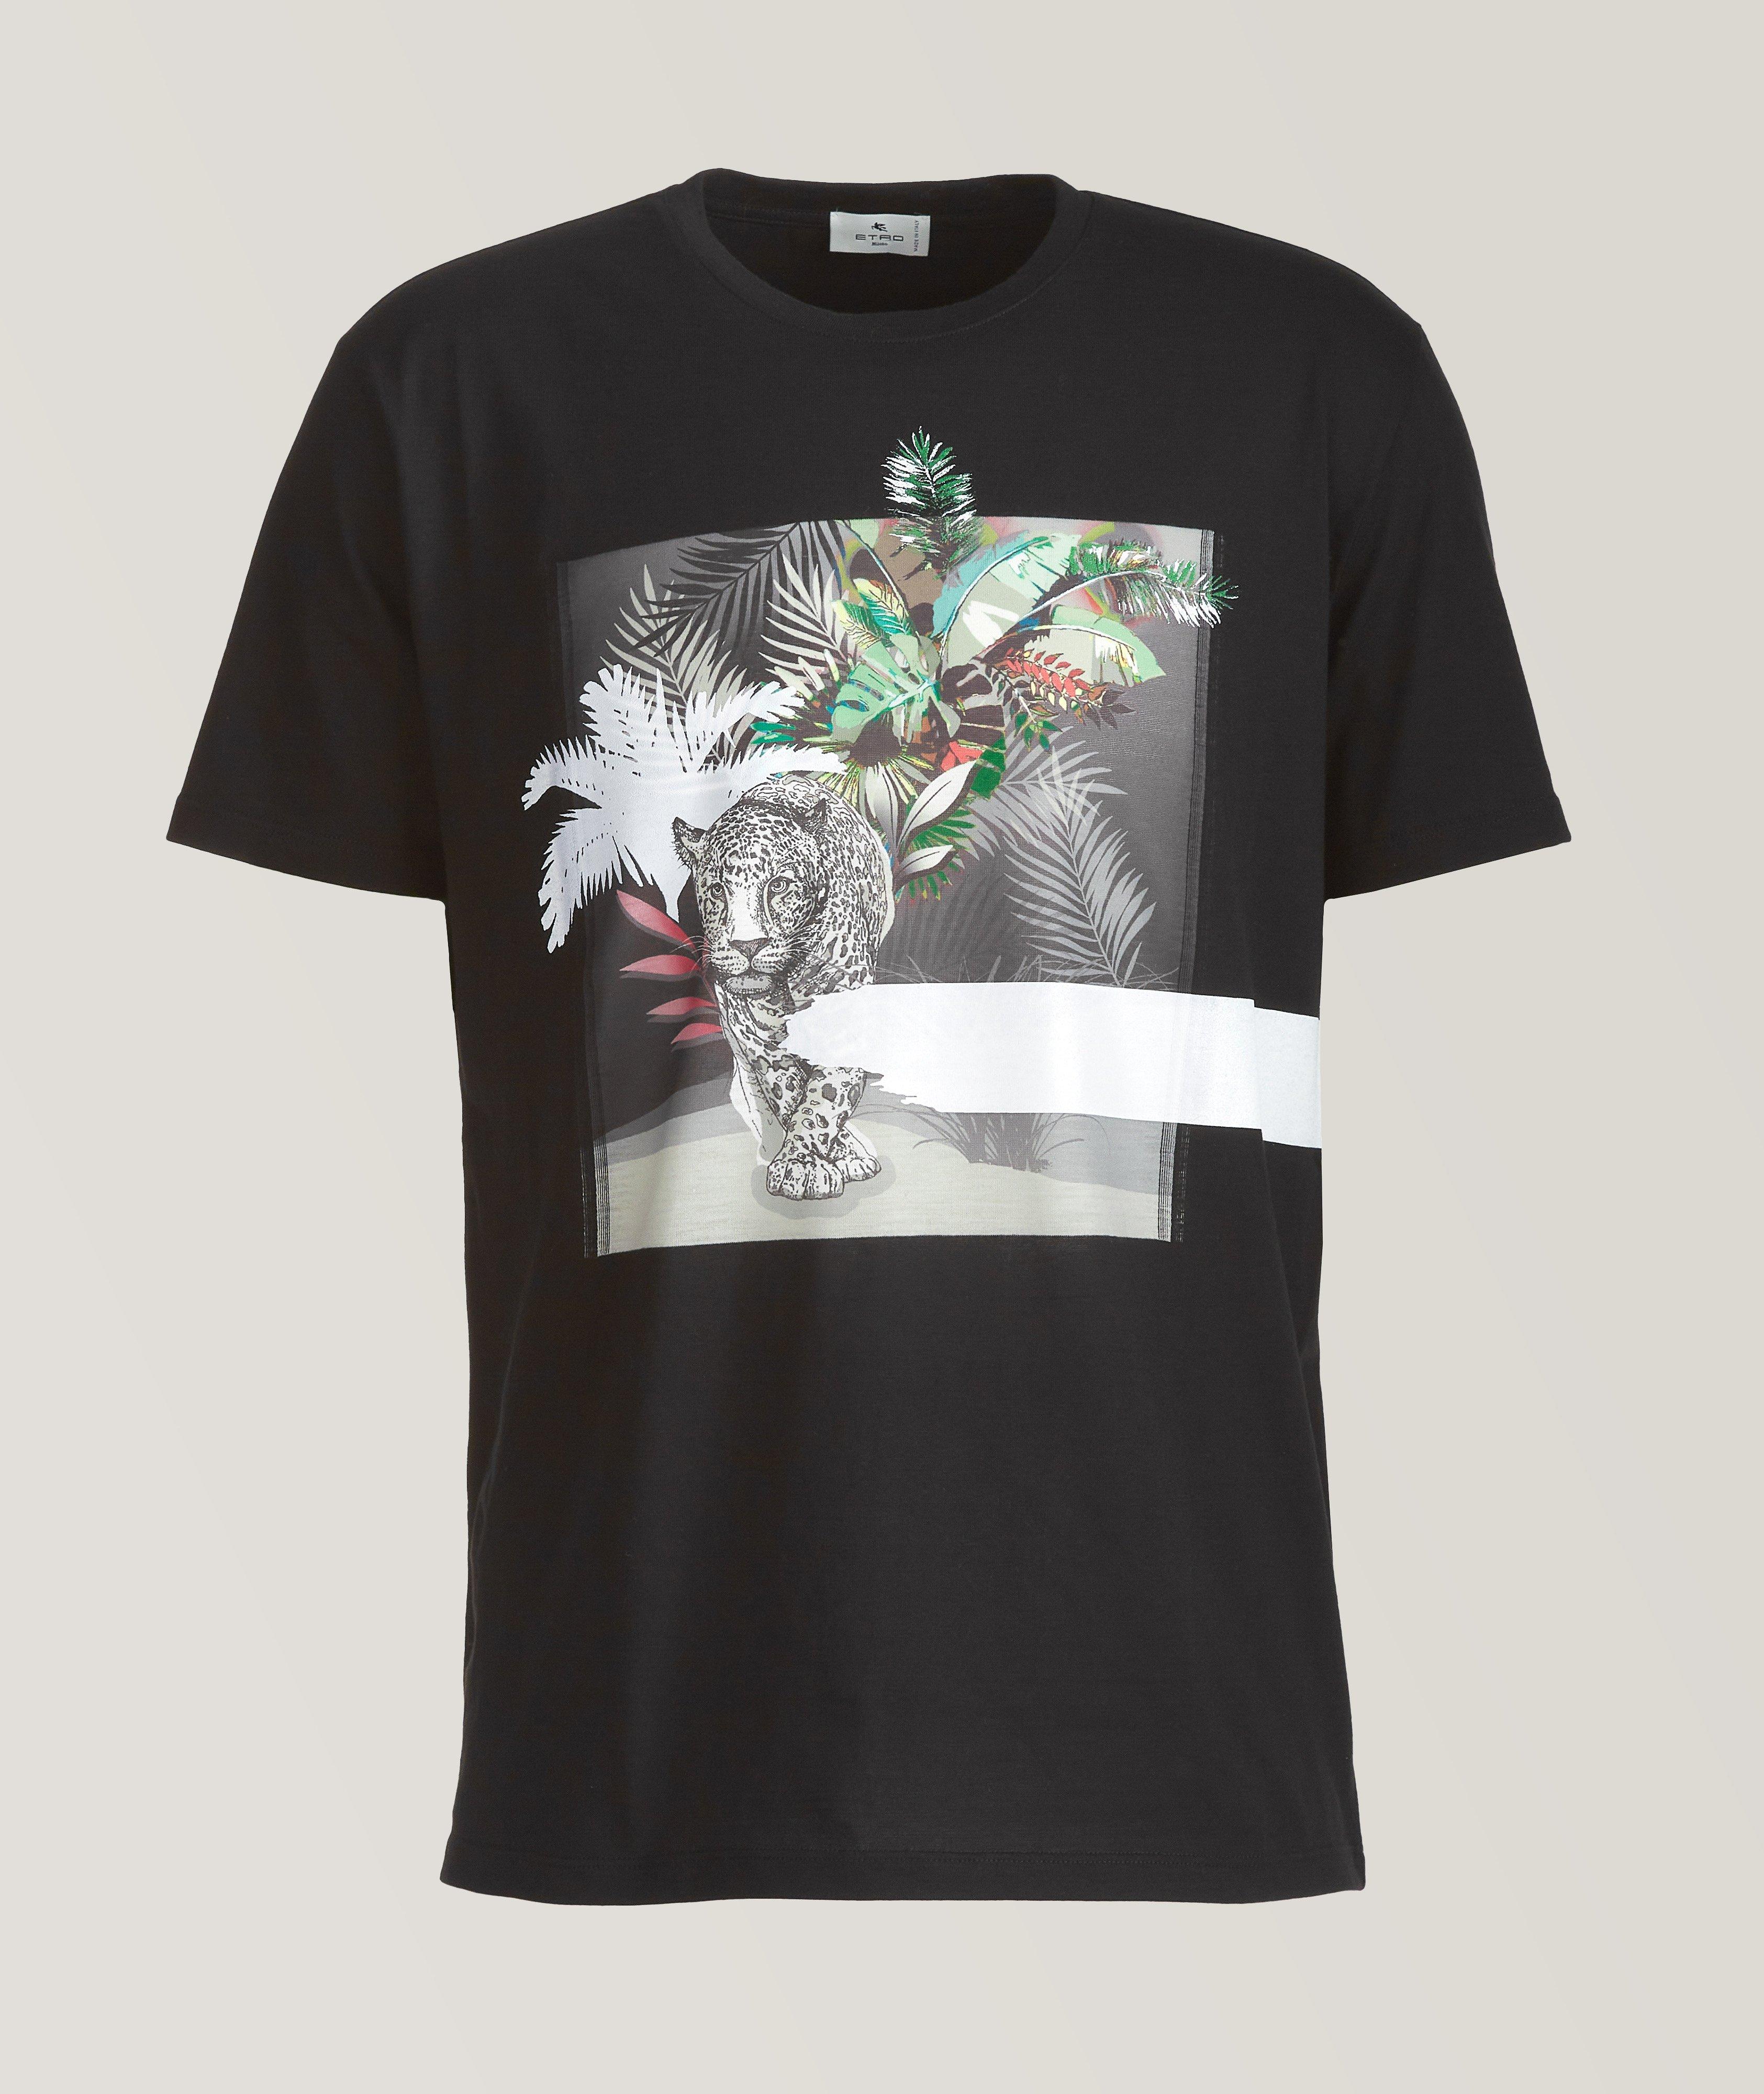 Arrow Brand Tree T-Shirt